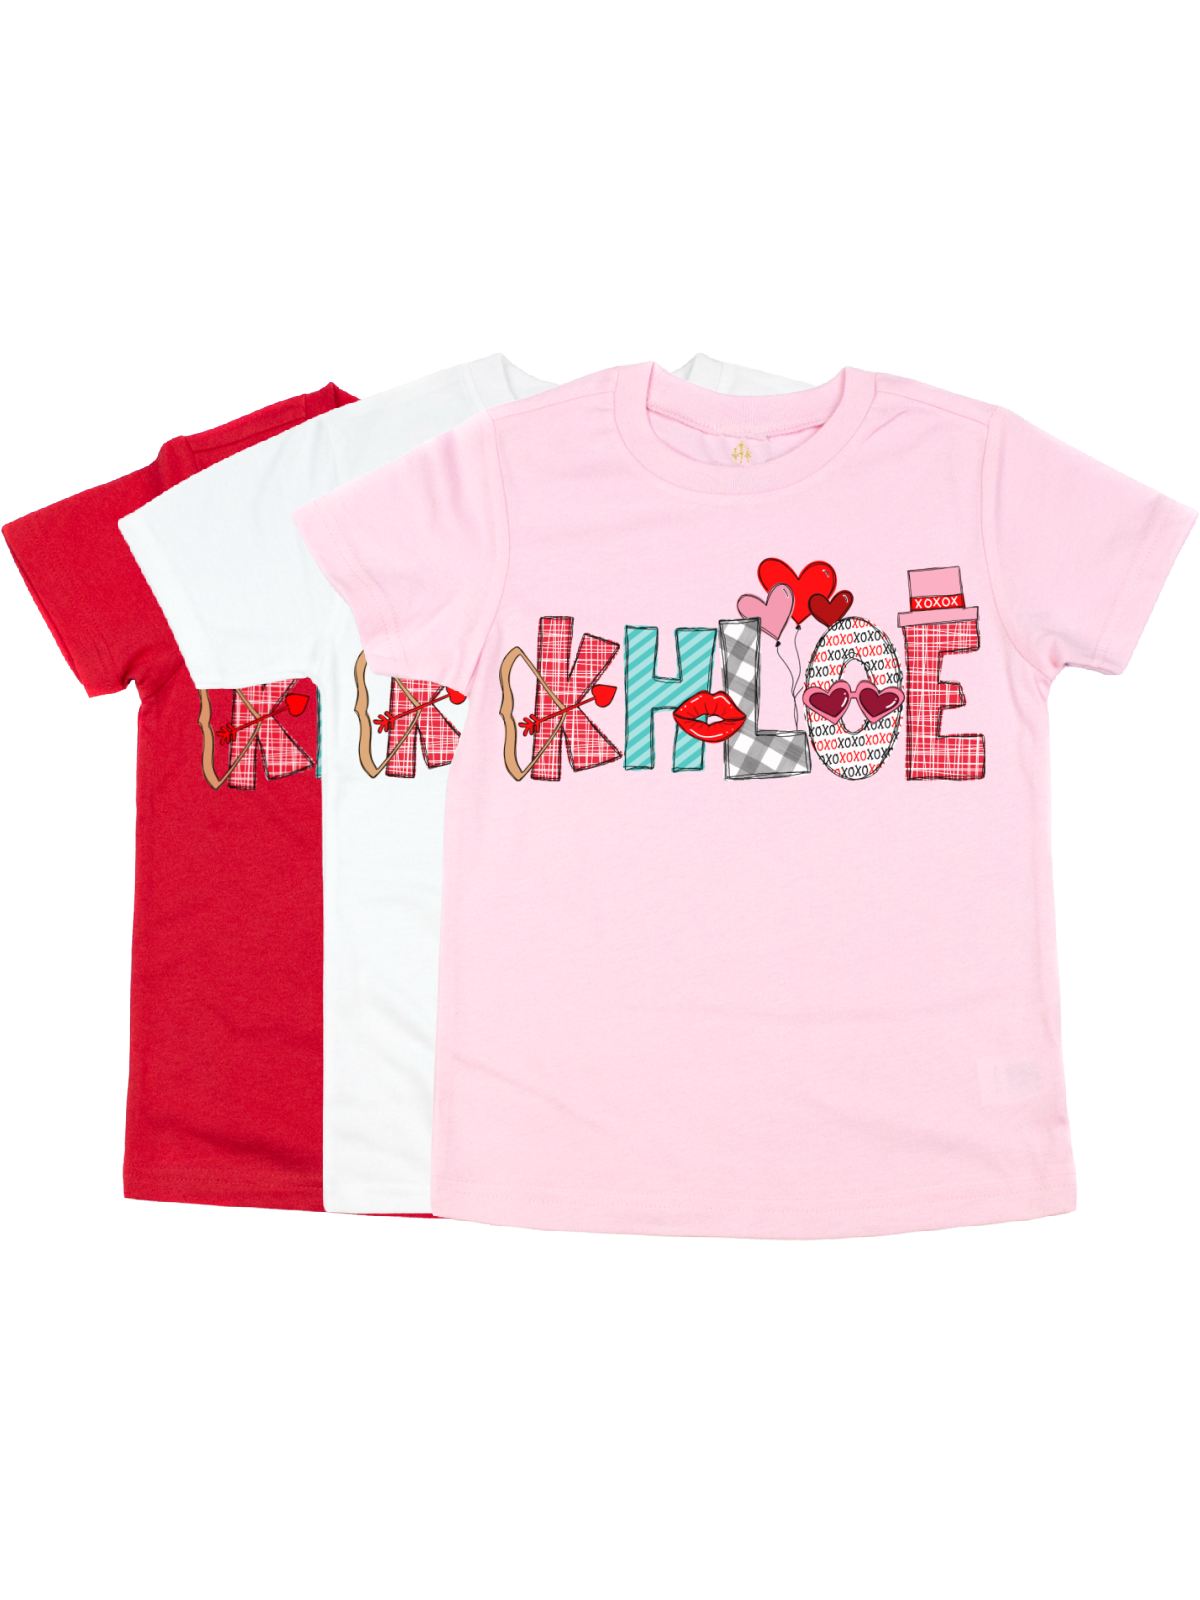 Kids Valentine's Day Shirt